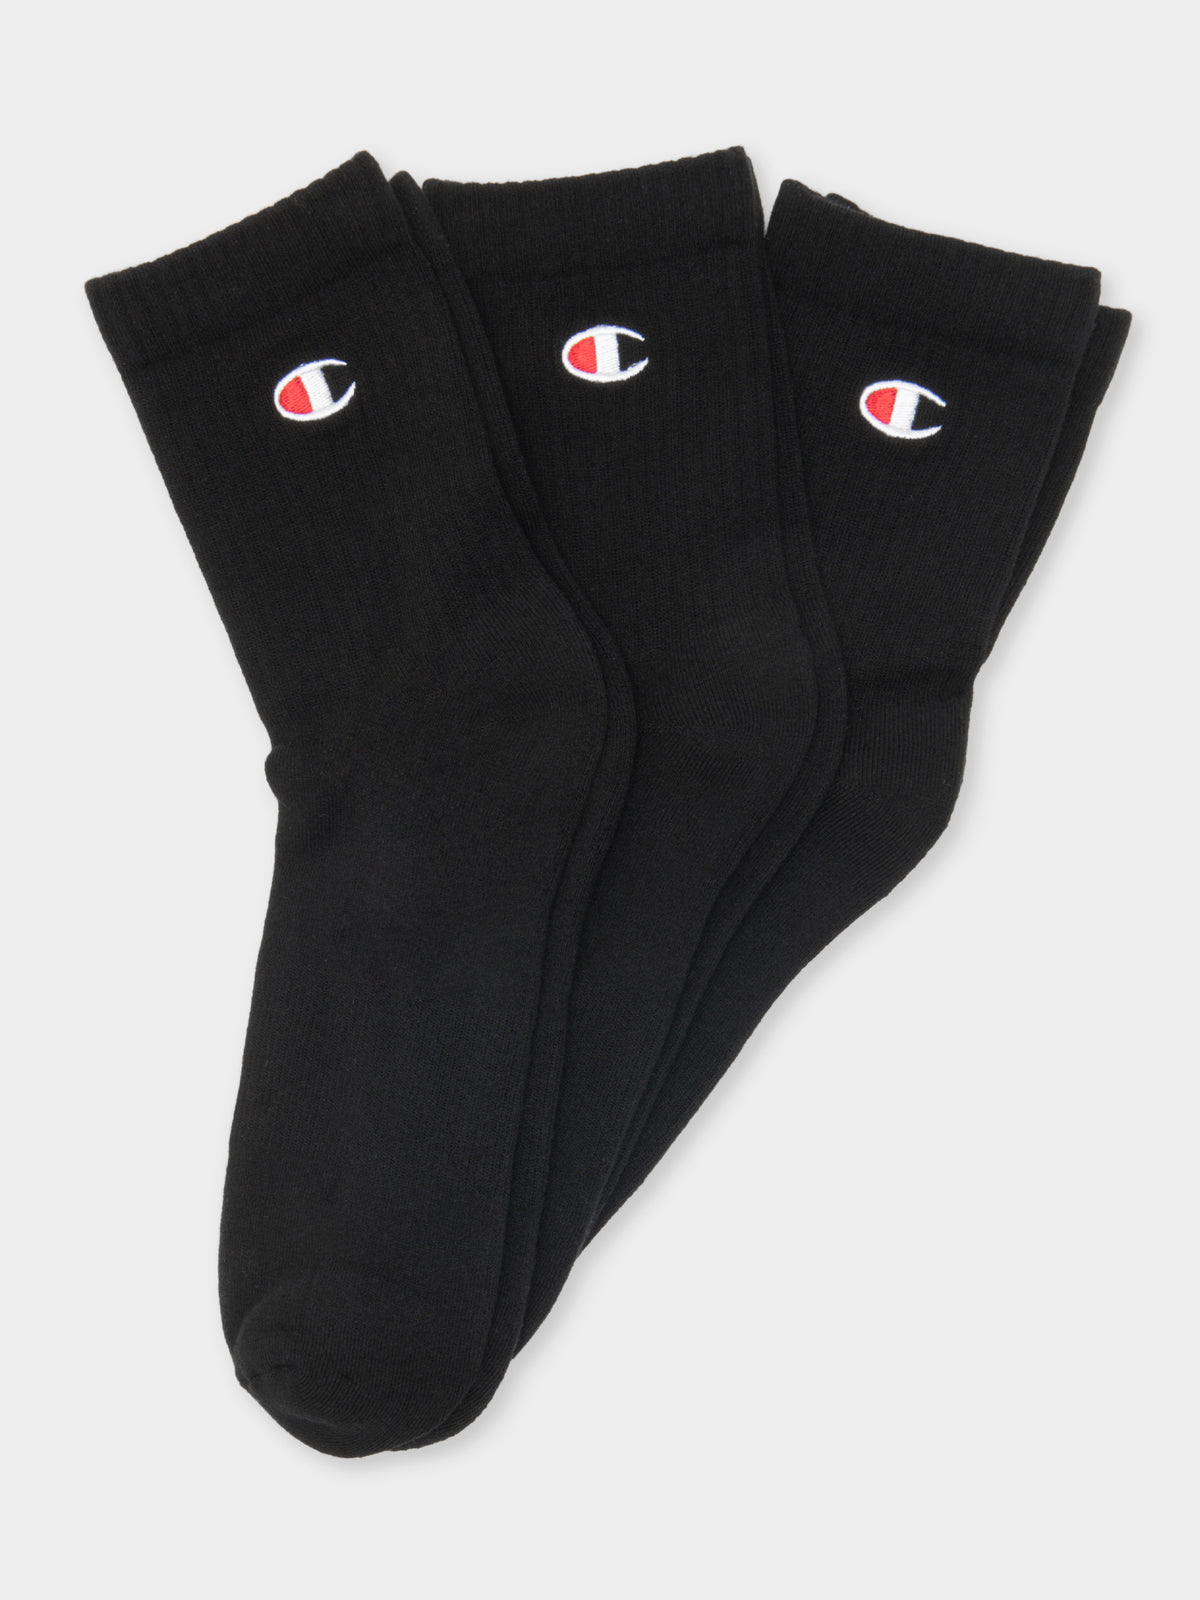 3 Pairs of Life Quarter-Length Crew Socks in Black